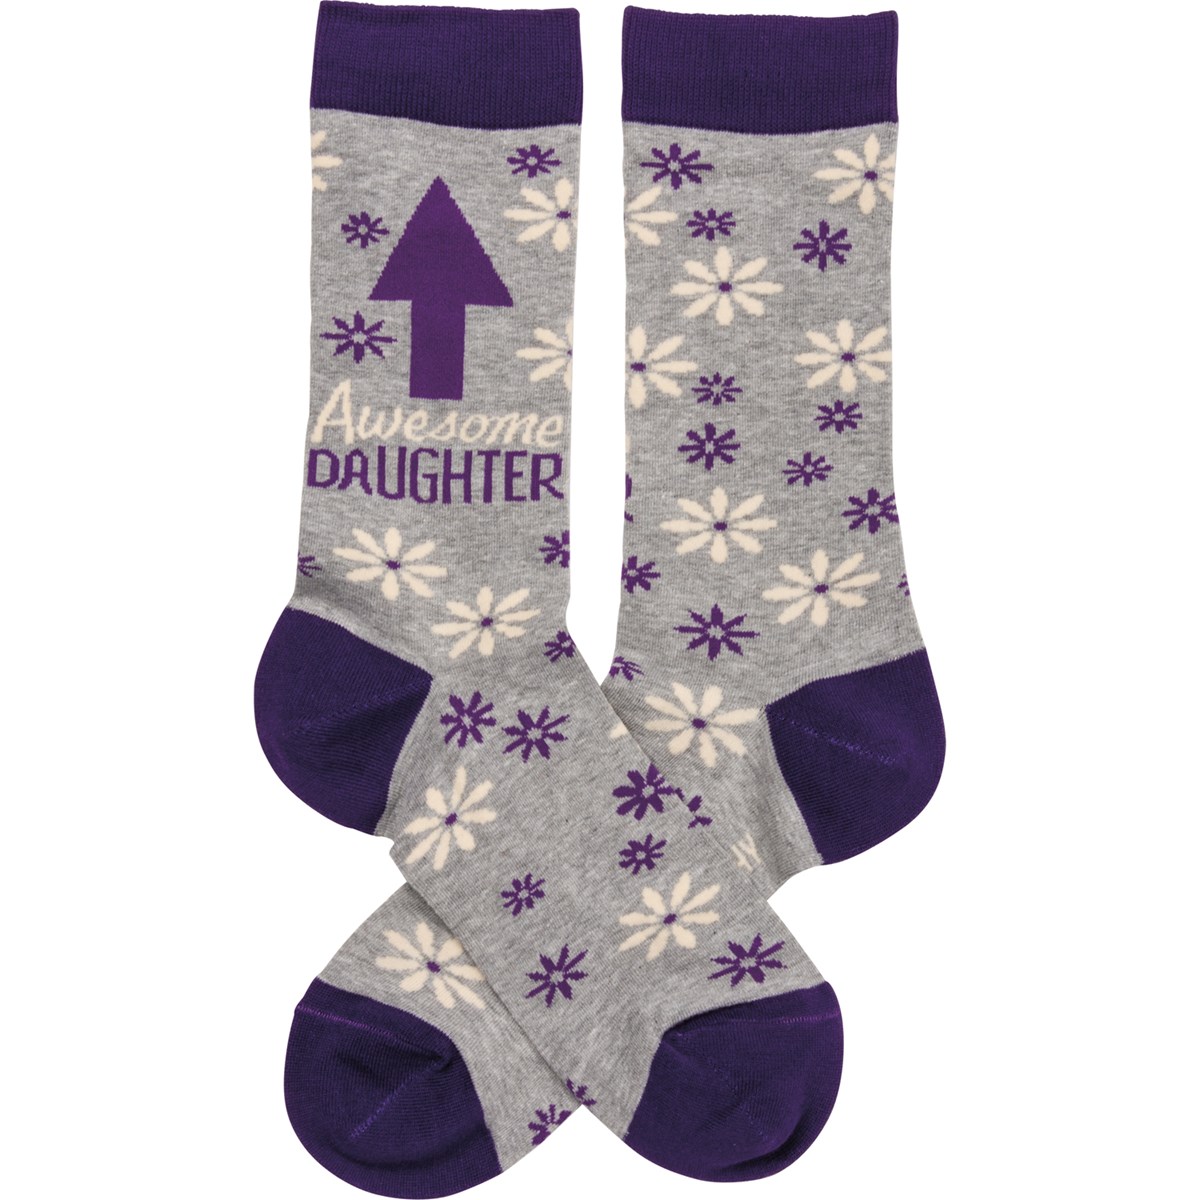 Awesome Daughter Socks - Cotton, Nylon, Spandex